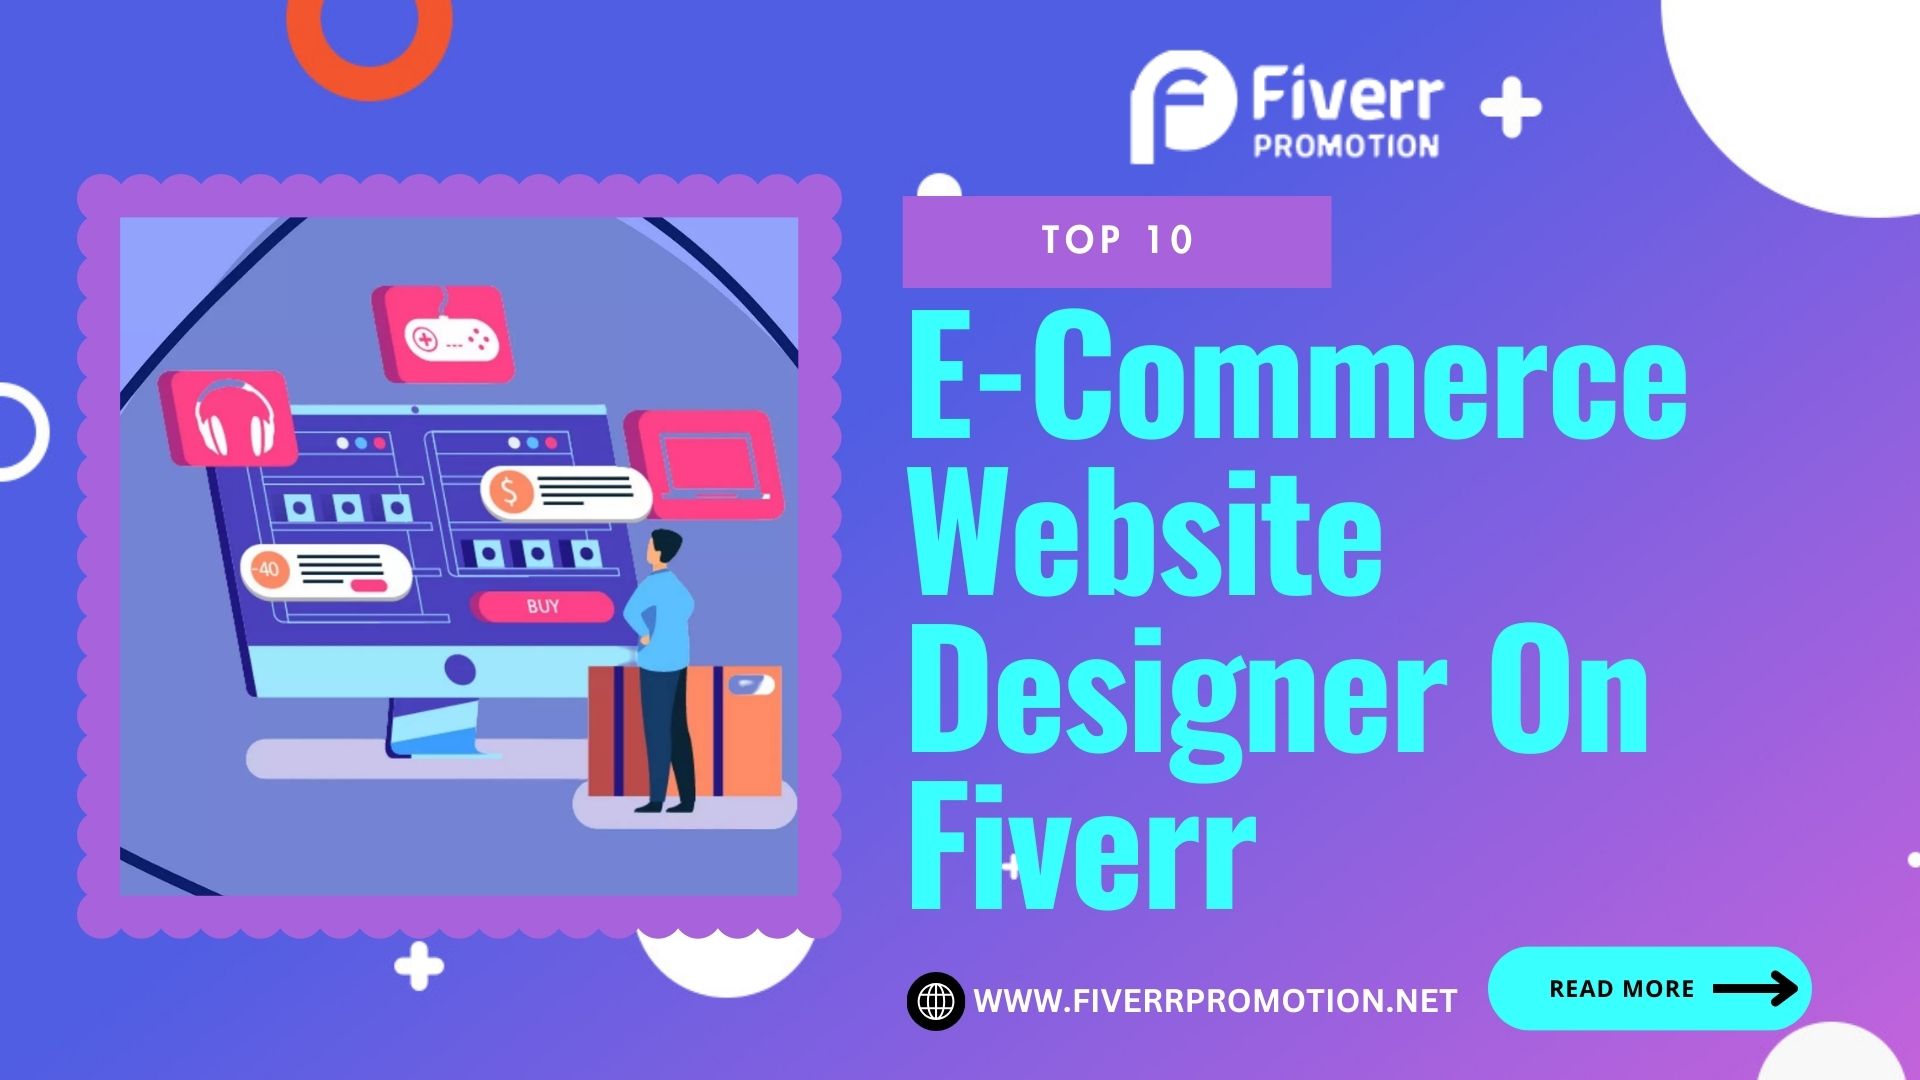 Top 10 E-commerce Website Designer on Fiverr